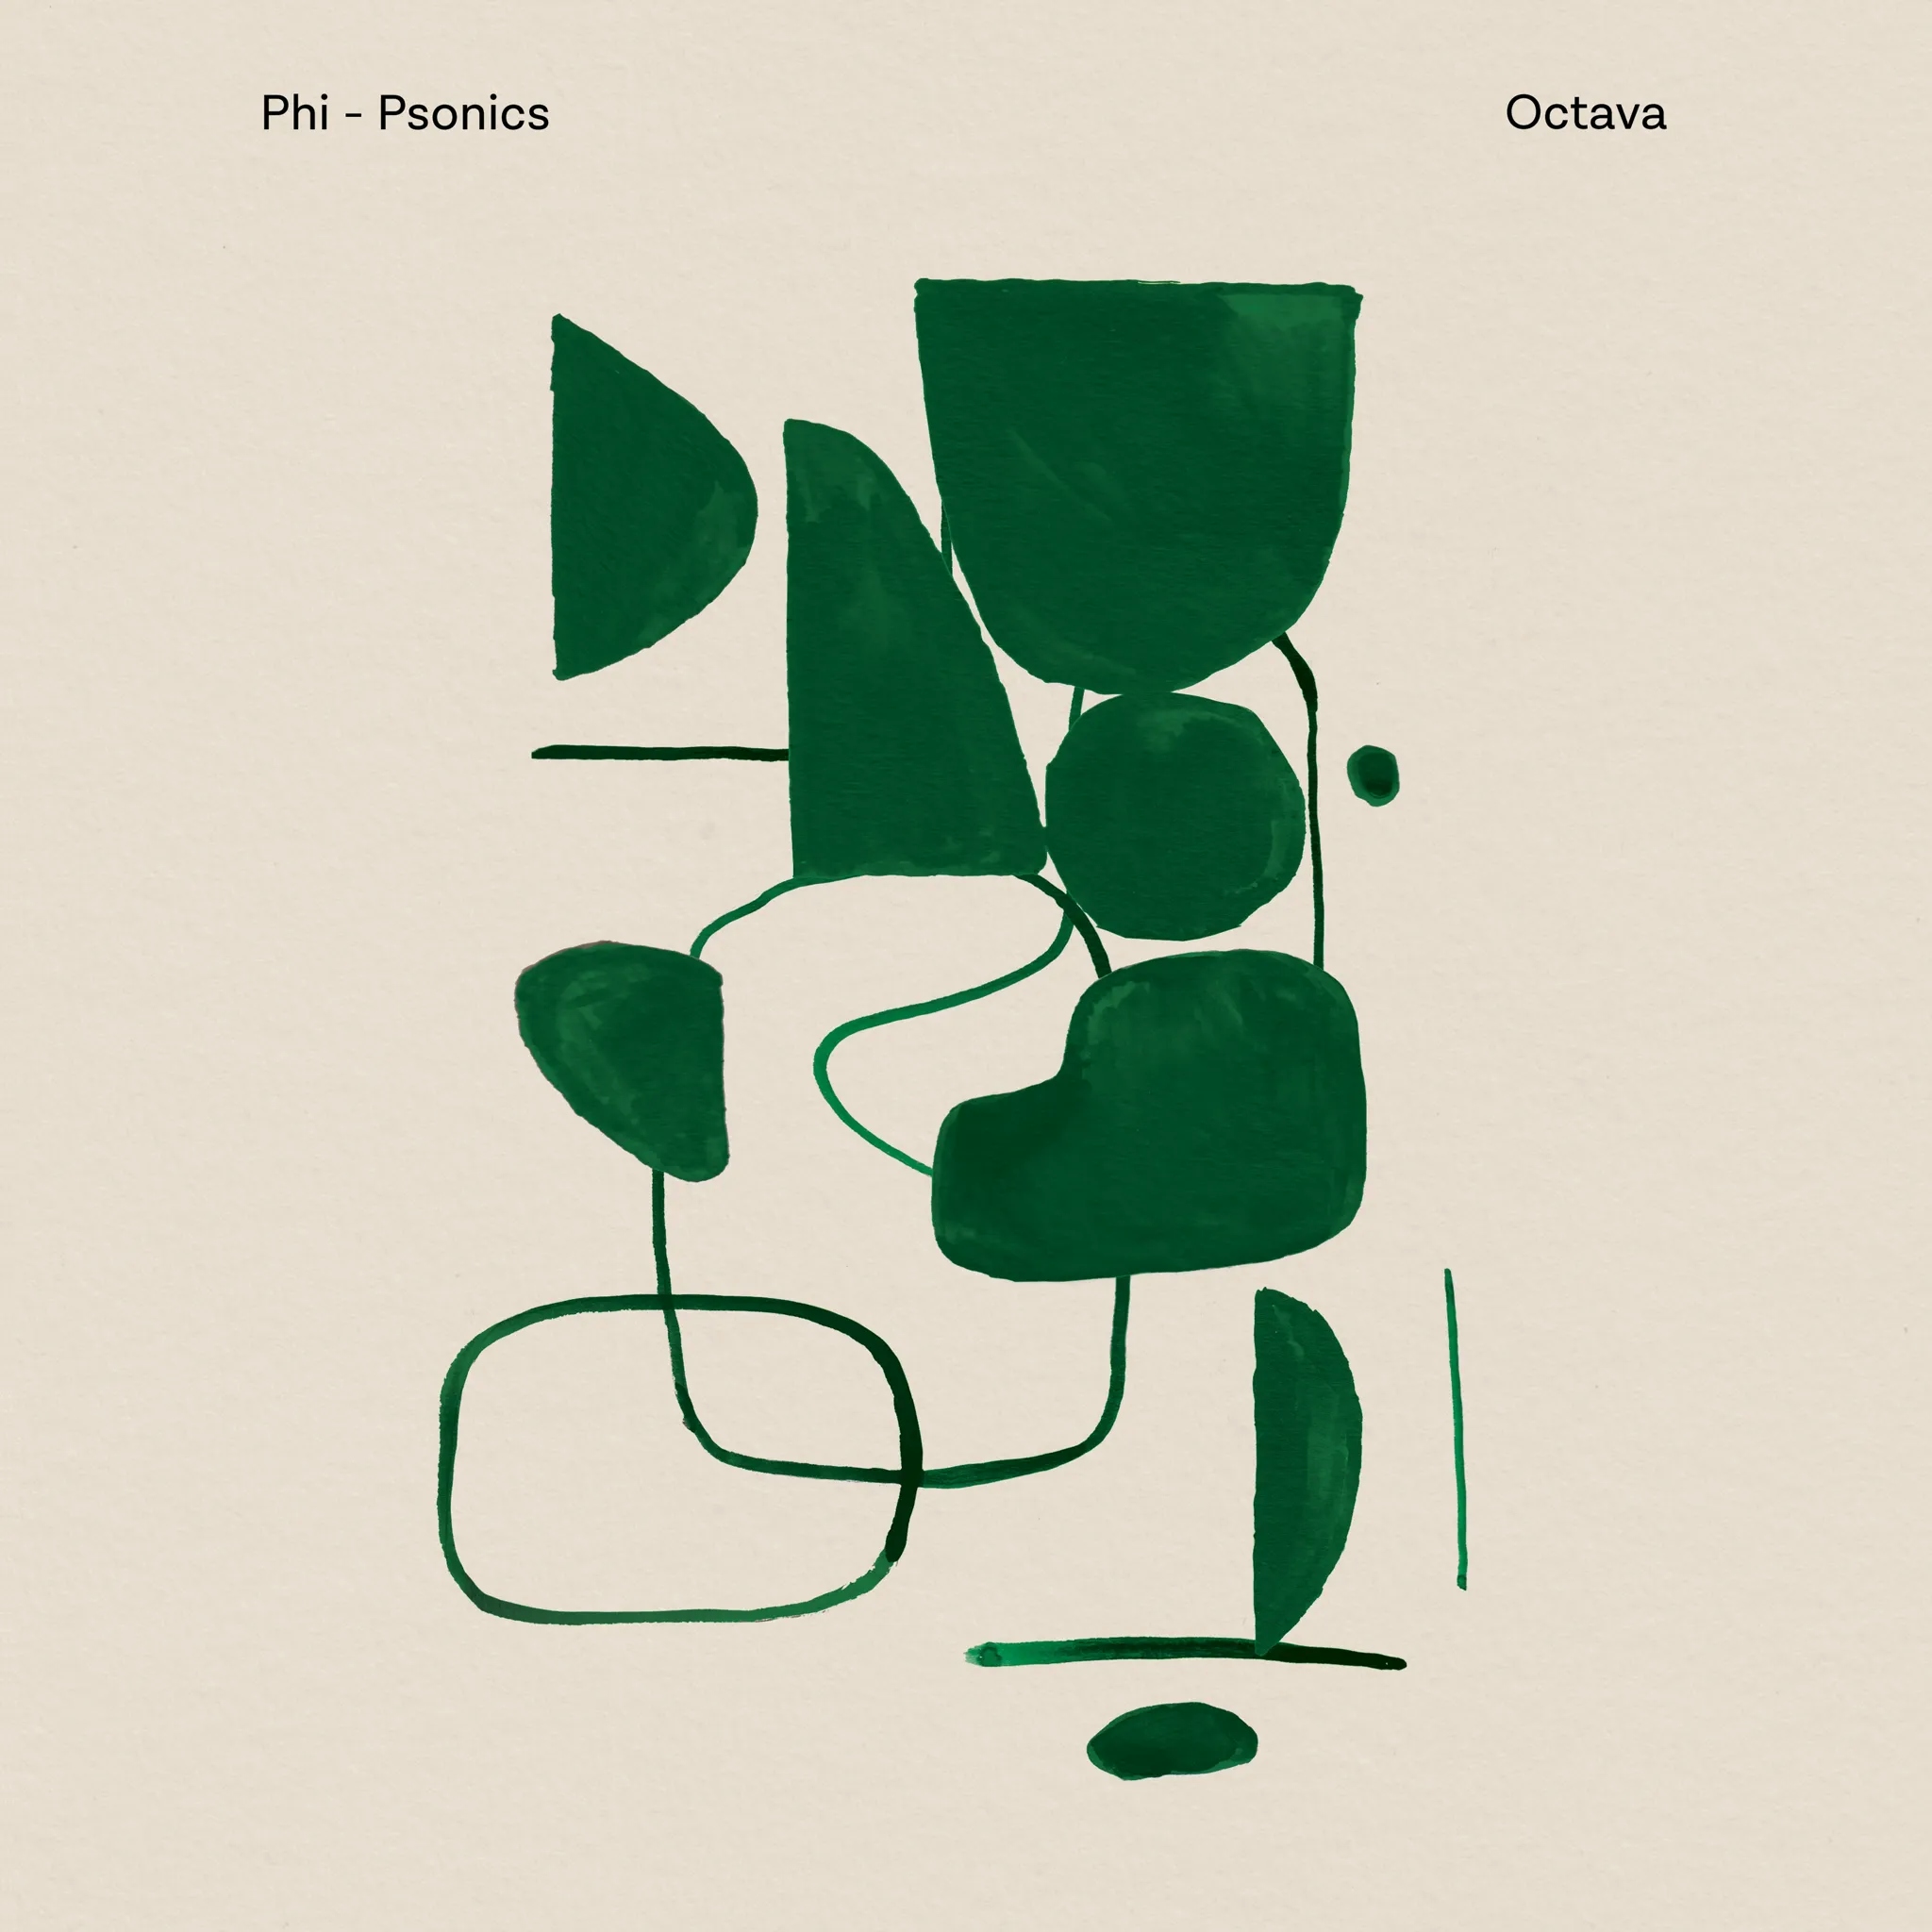 Album artwork for Octava by Phi-Psonics